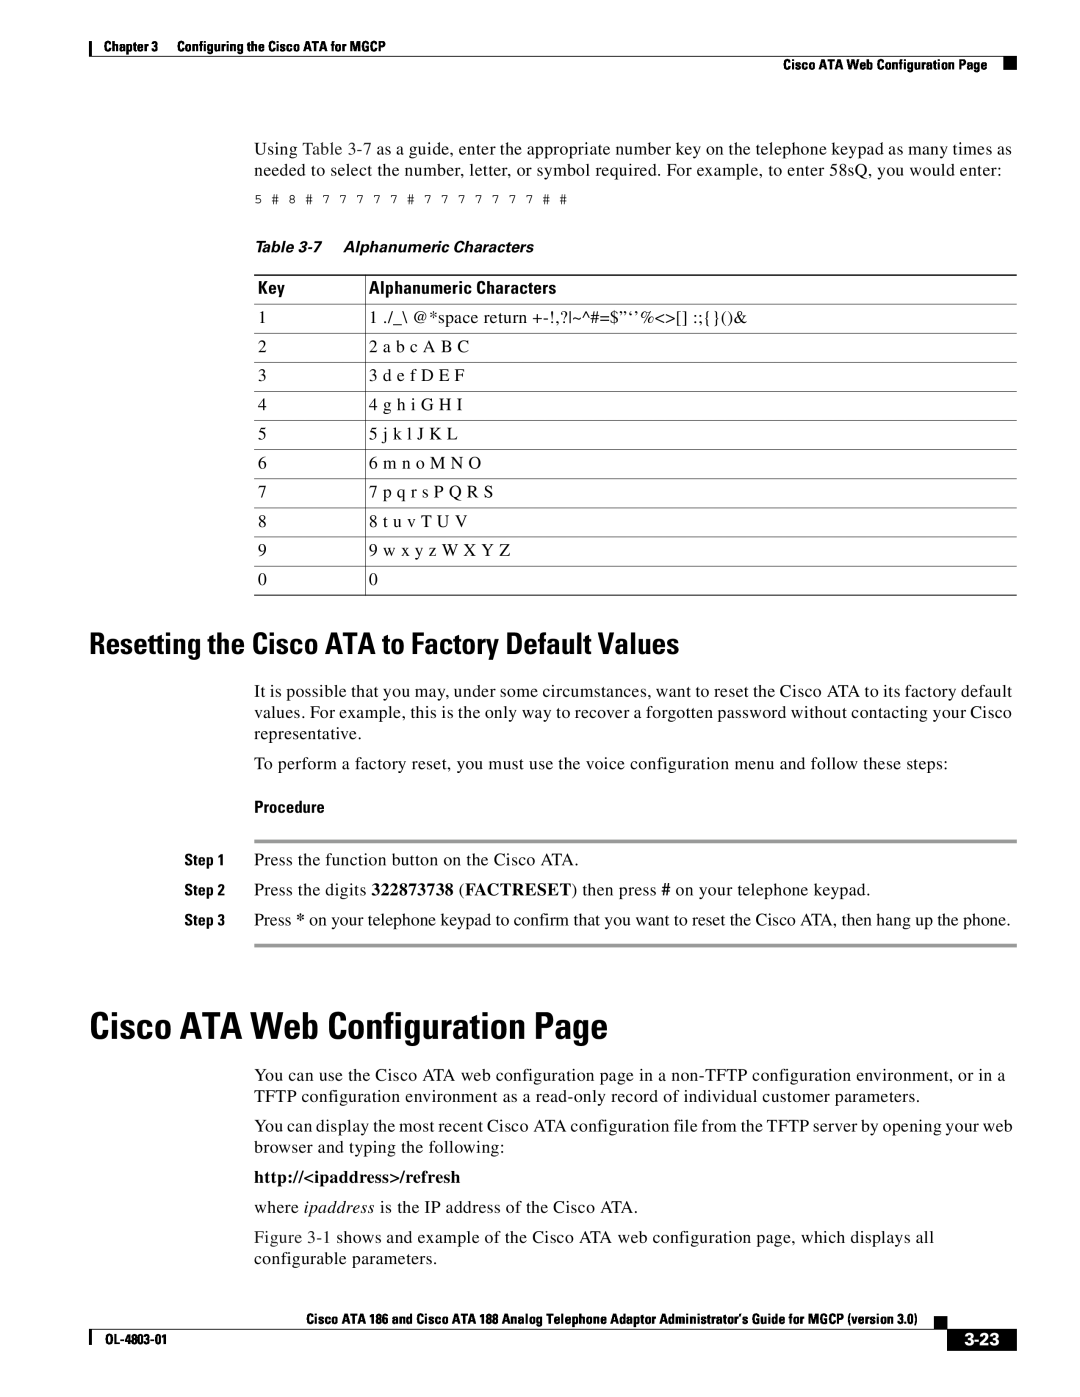 Cisco Systems ATA 186 Cisco ATA Web Configuration Page, Resetting the Cisco ATA to Factory Default Values, 3-23, Procedure 